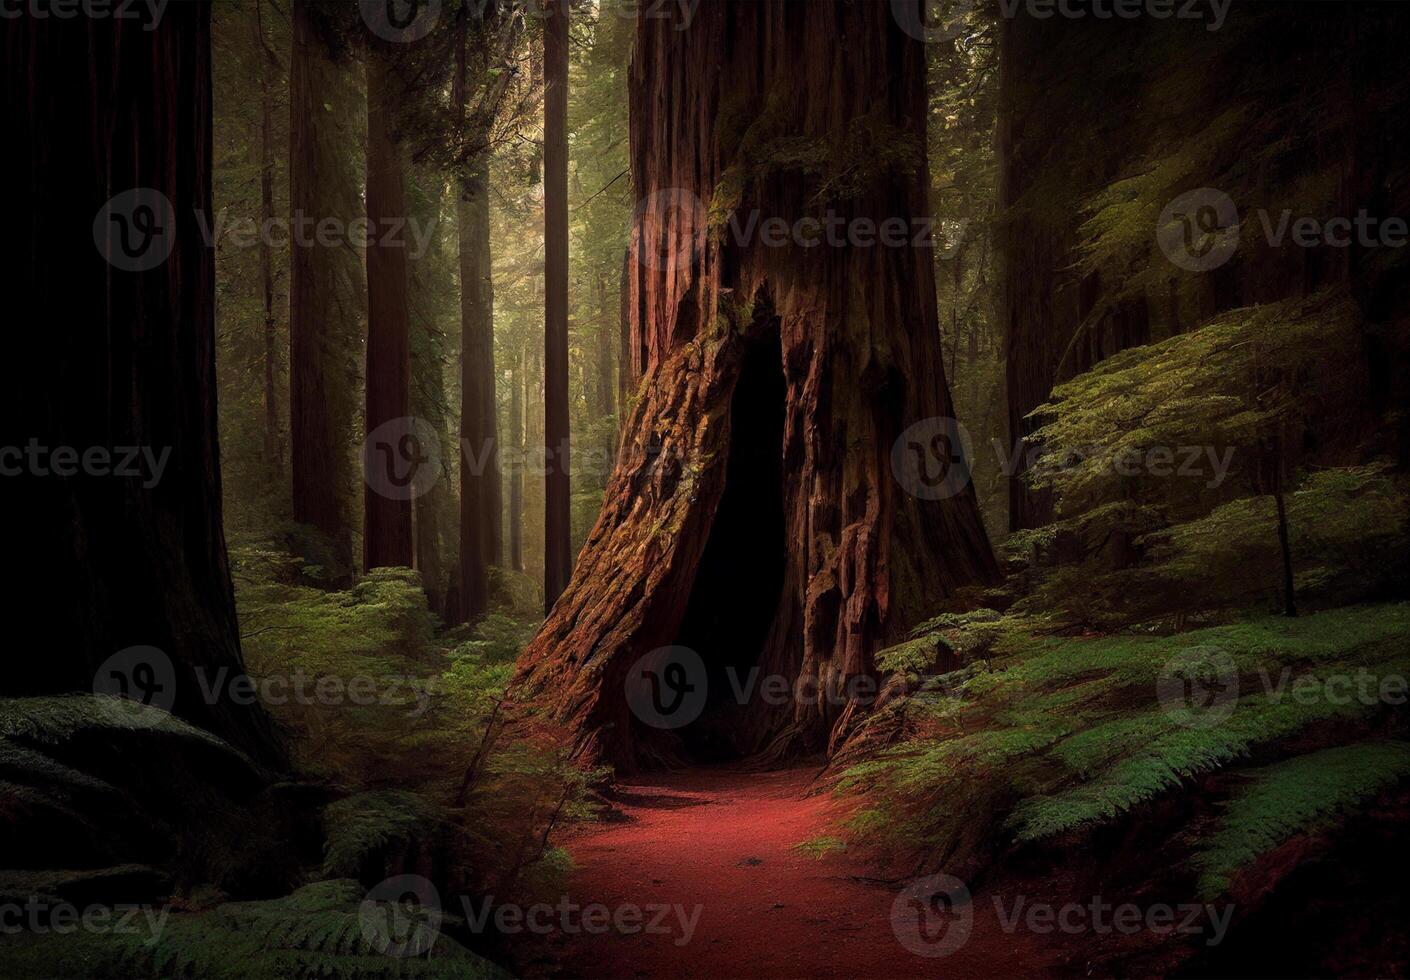 tät skog i Kalifornien, många sequoias - ai genererad bild foto